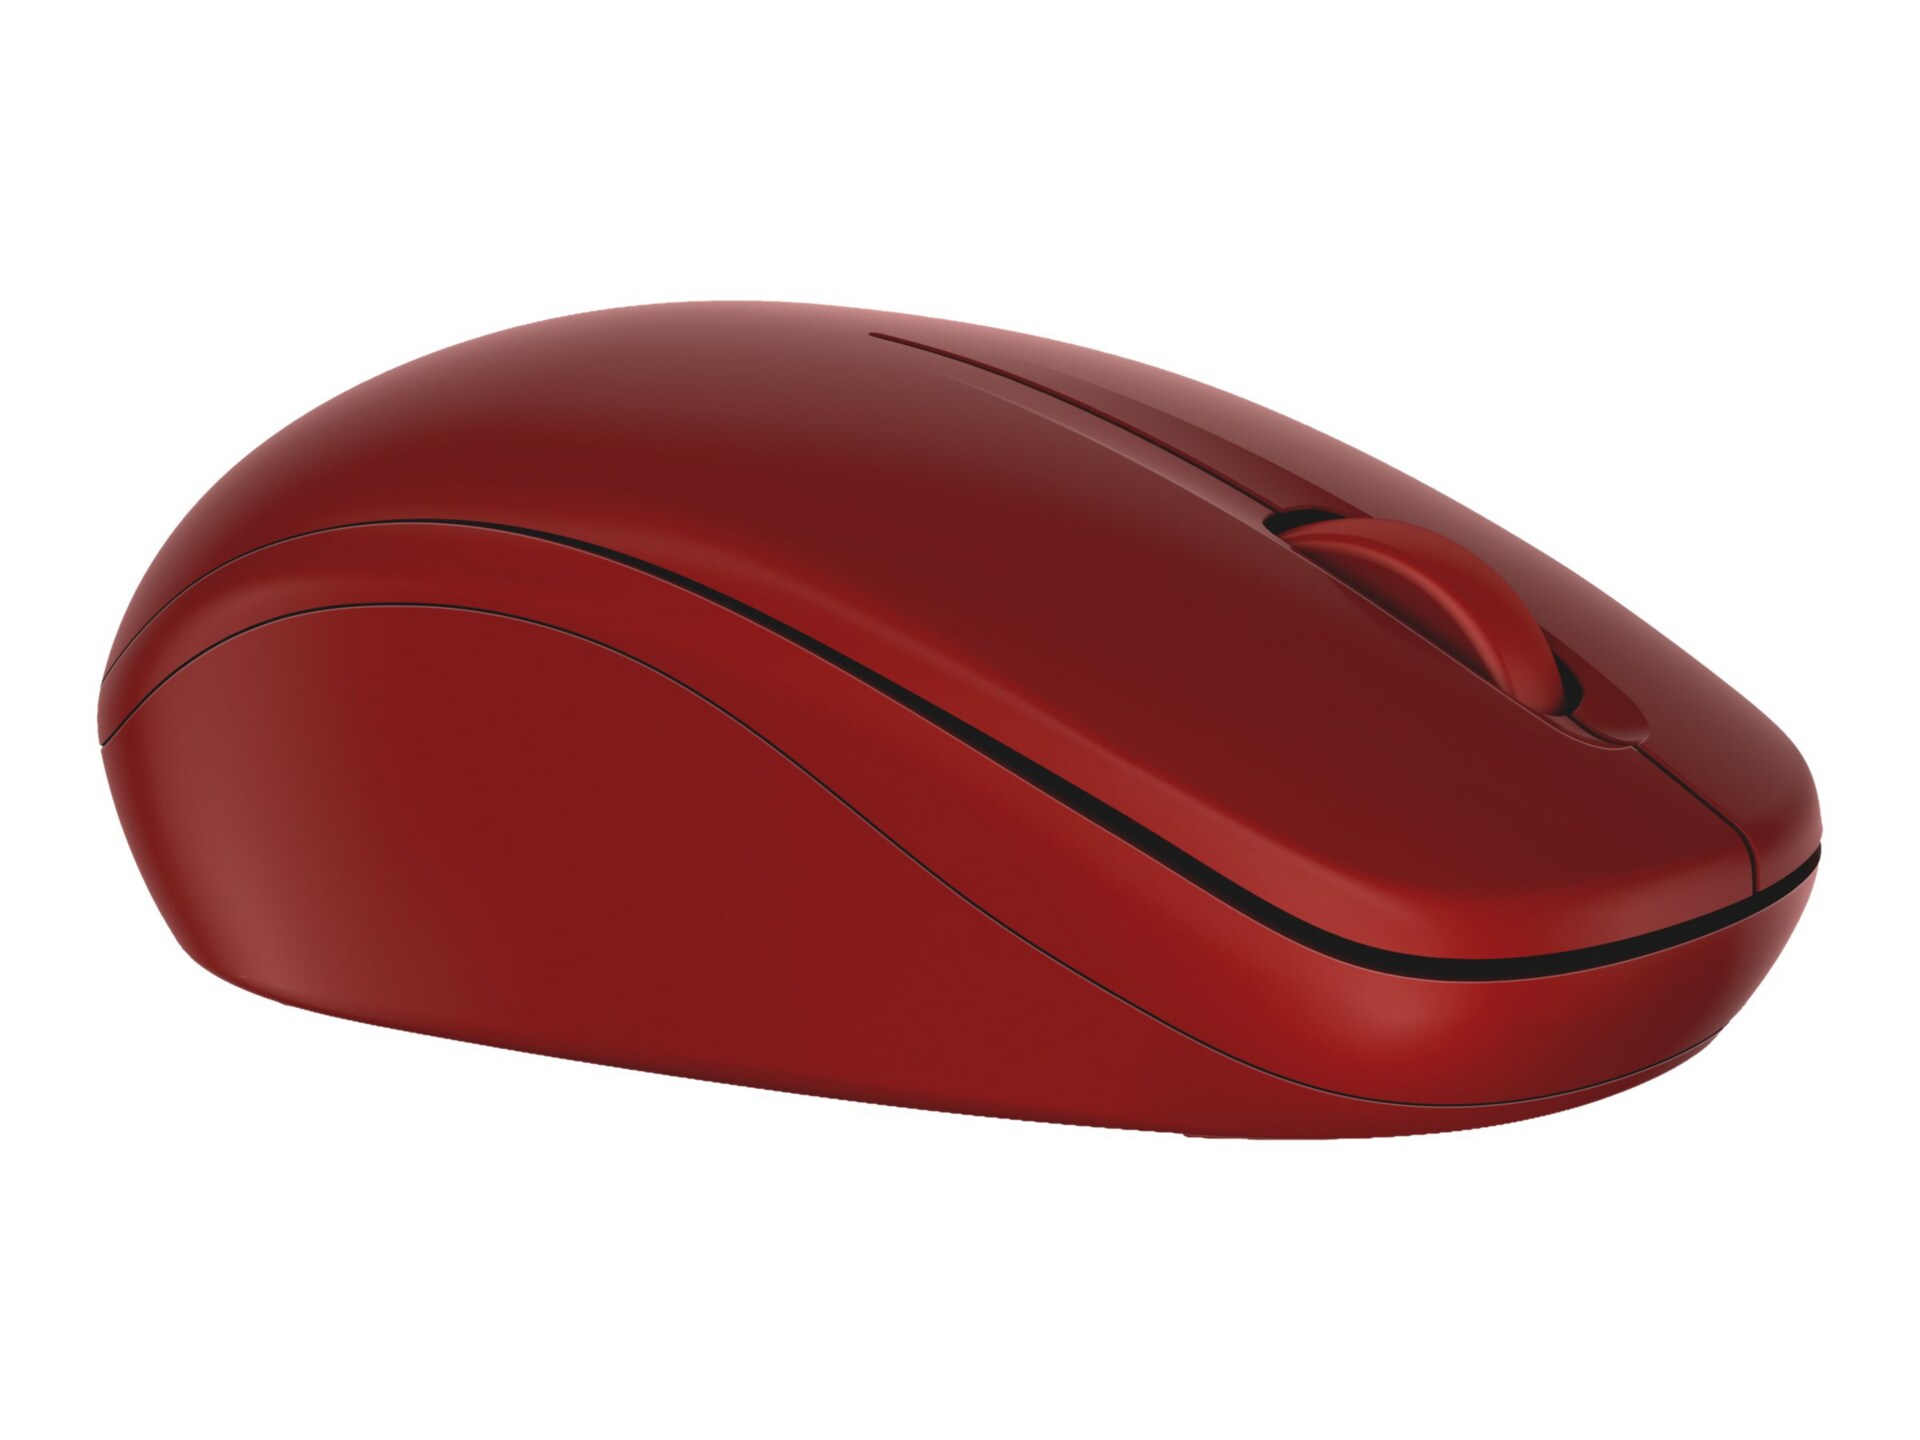 Dell Wm126 Mouse 2 4 Ghz Red Wm126 Rd Mice Trackballs Cdw Com